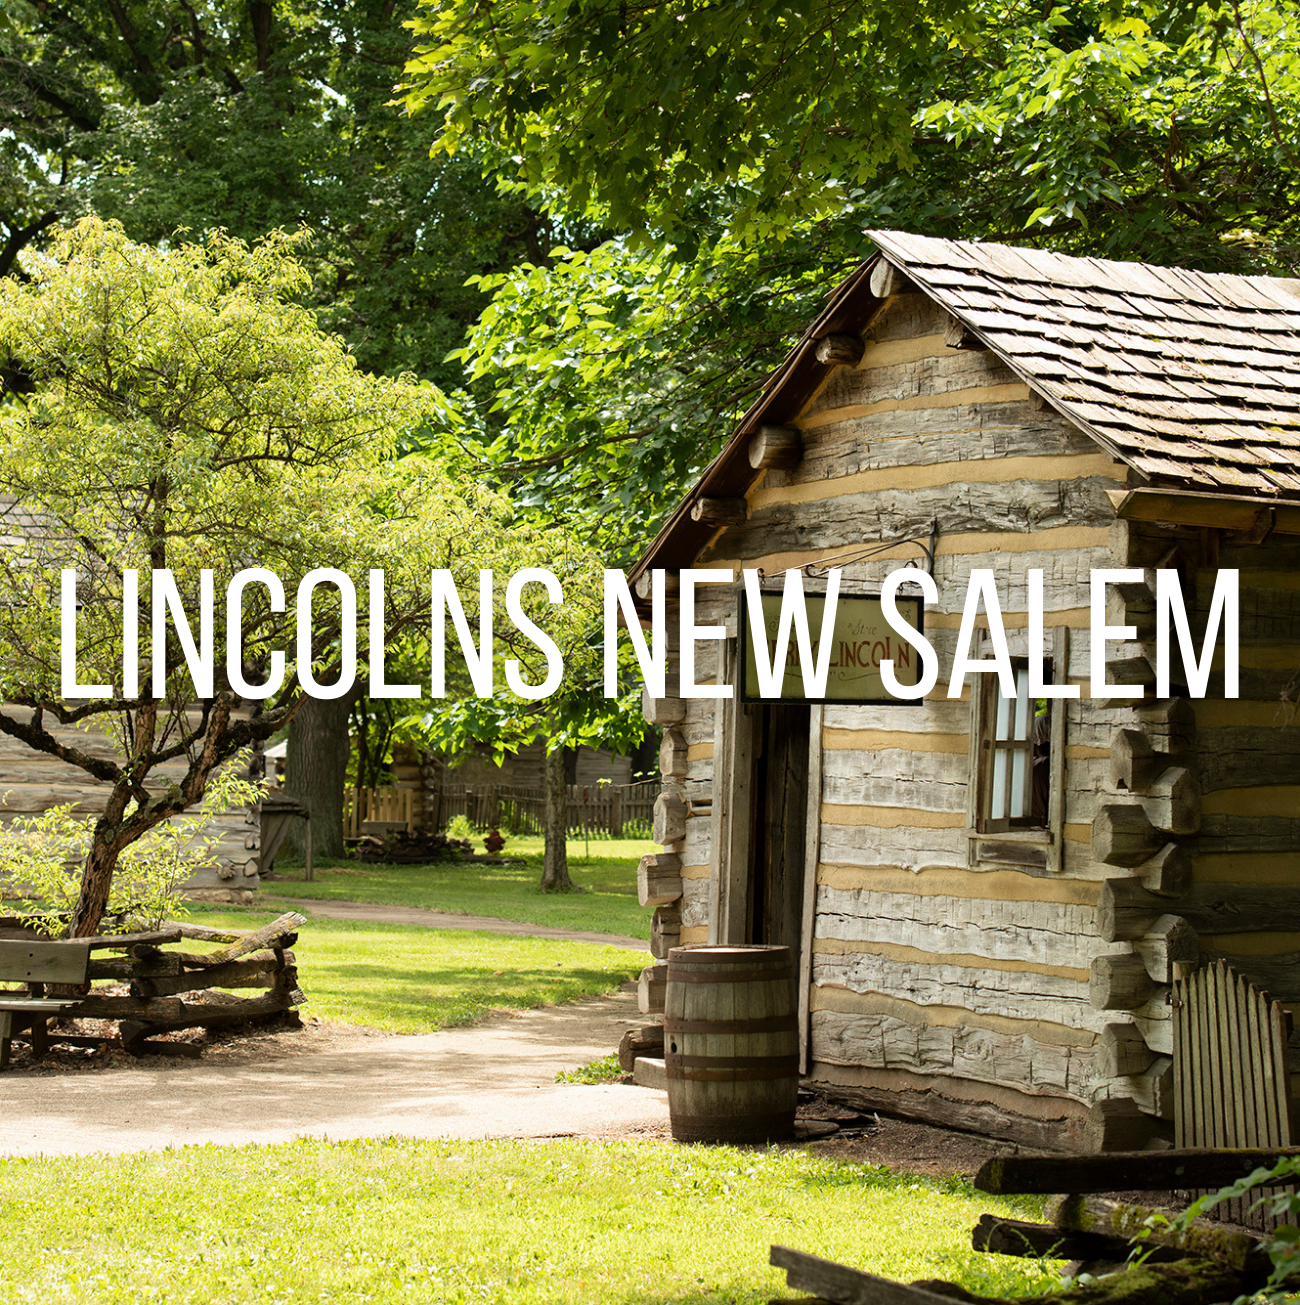 New Salem